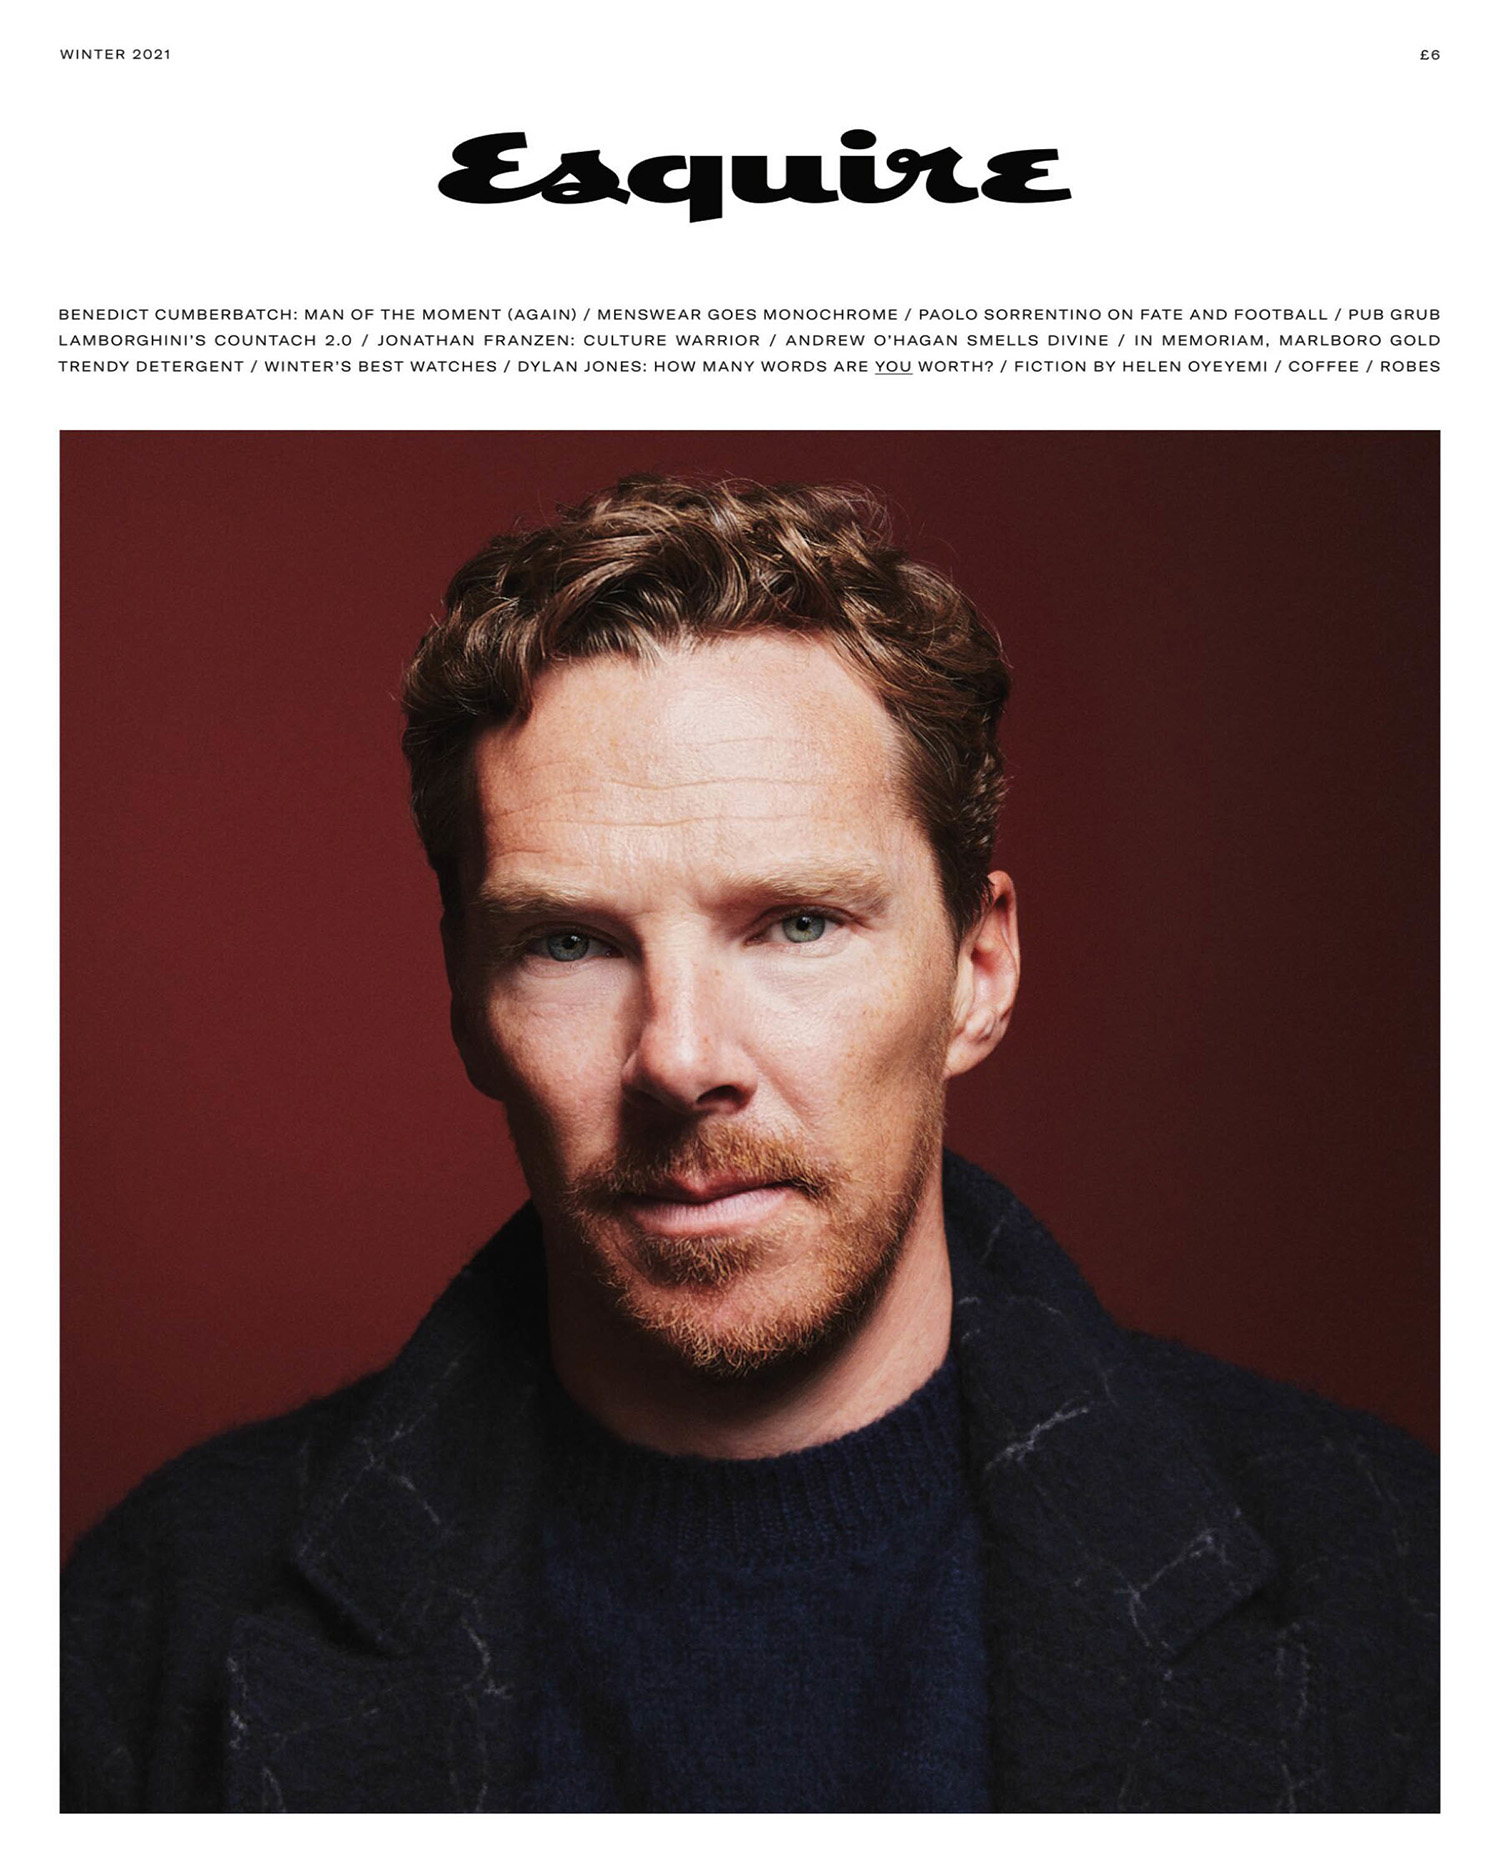 Benedict Cumberbatch covers Esquire UK Winter 2021 by Simon Emmett